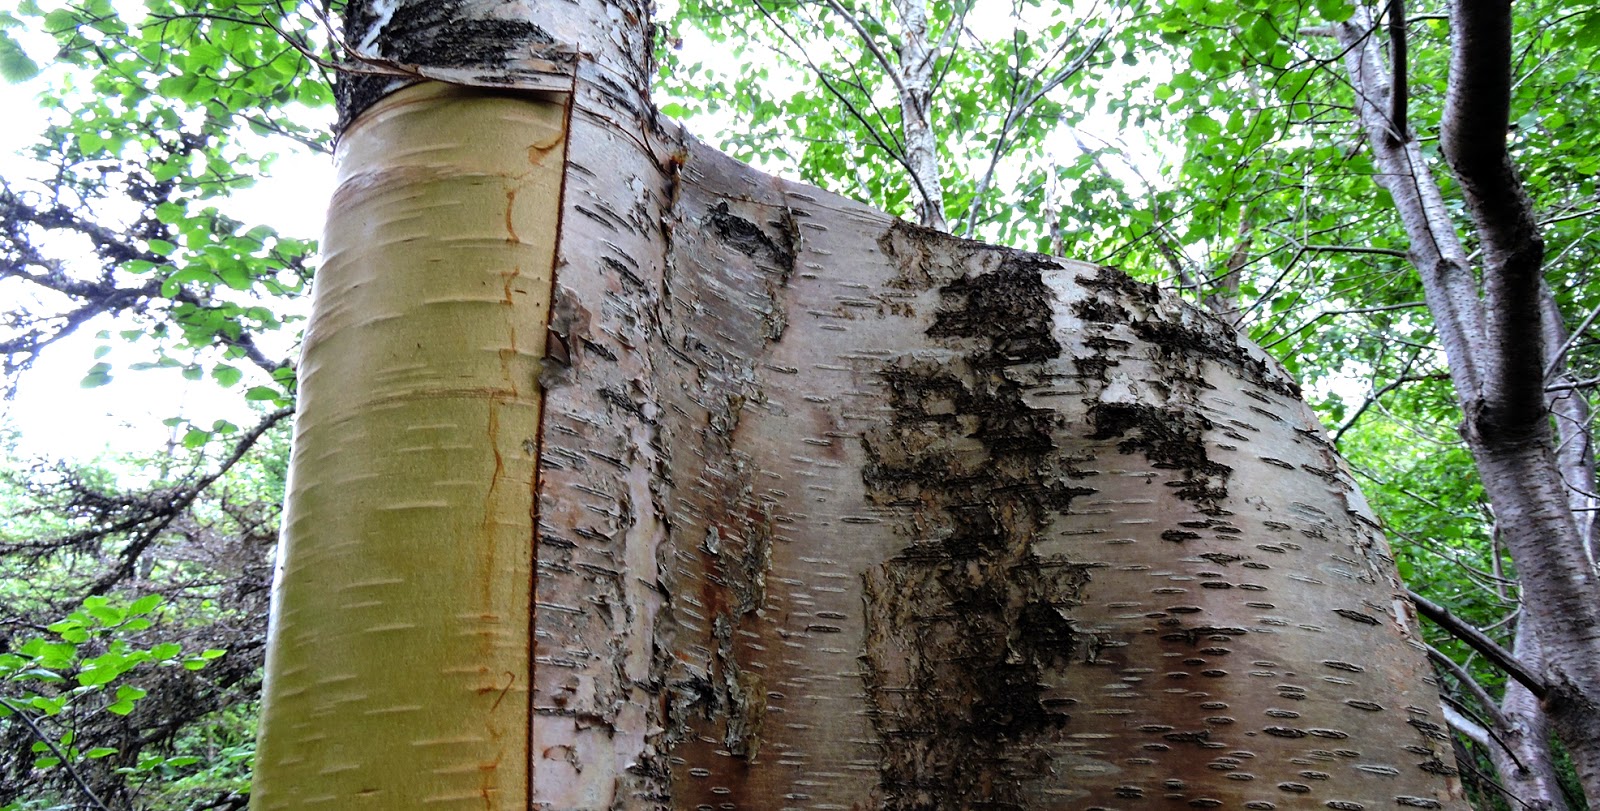 Elfshot: Harvesting Birch Bark